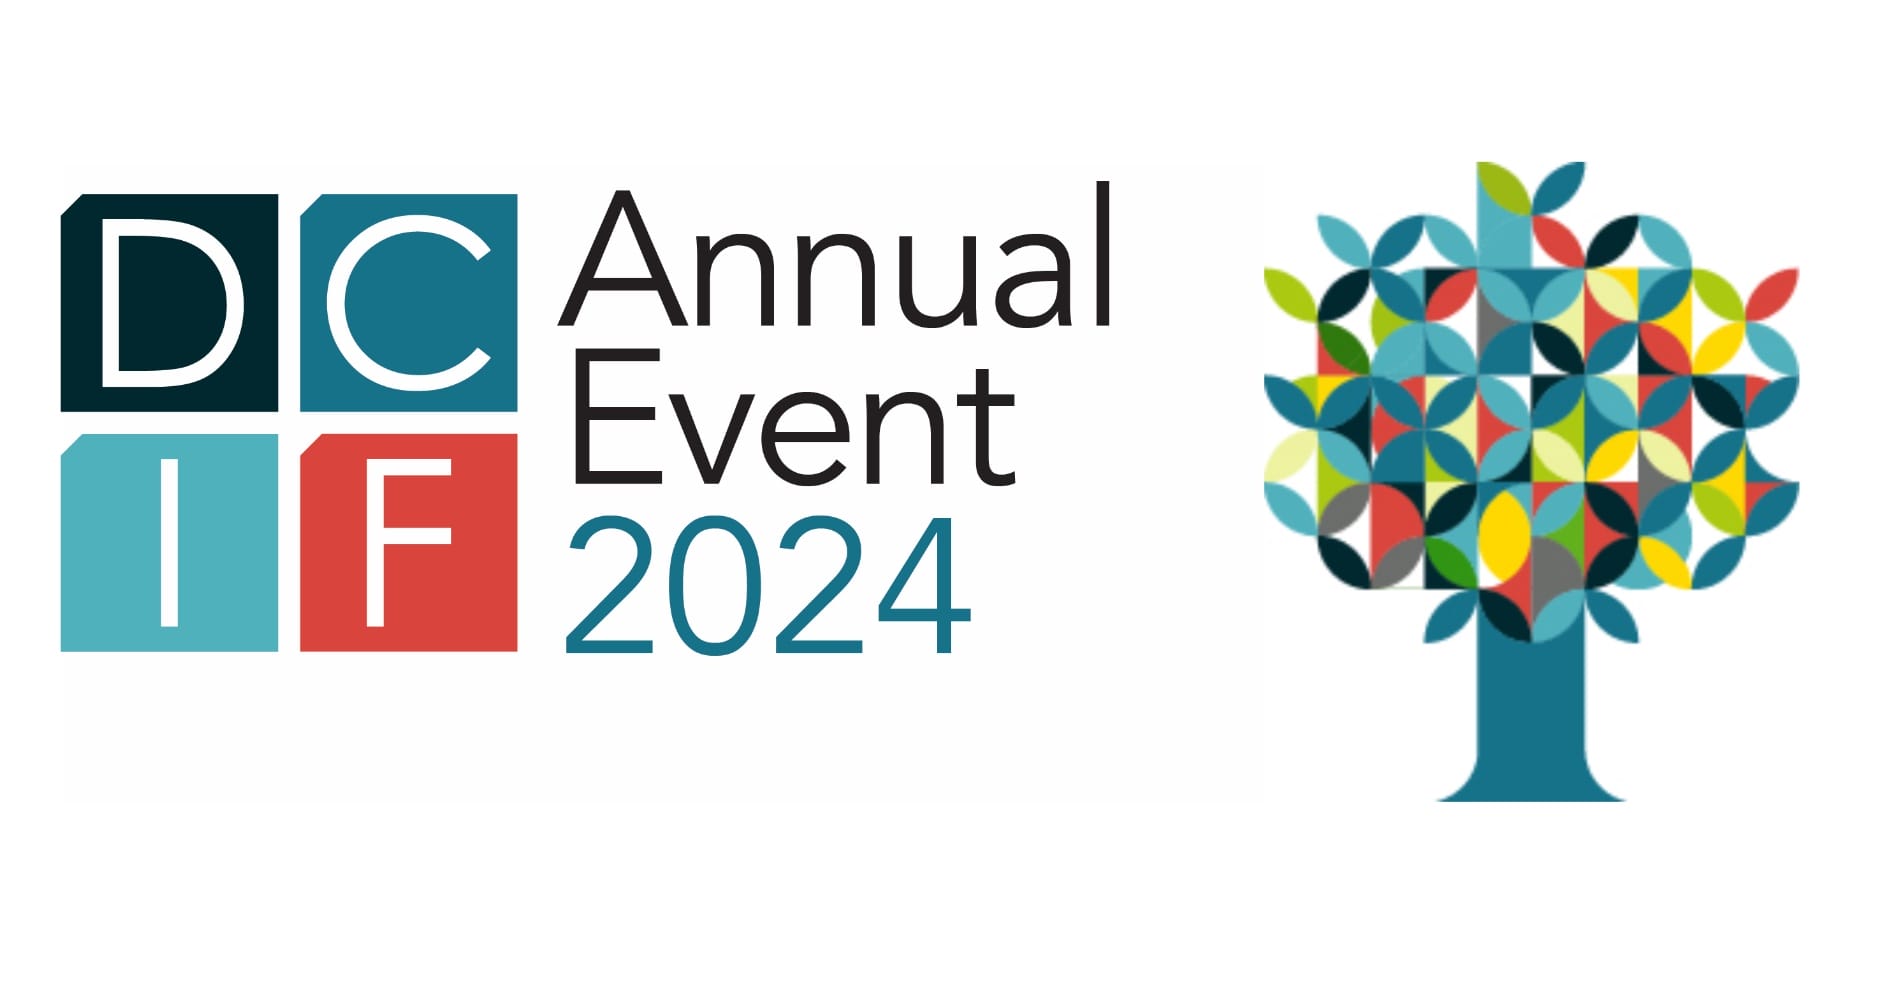 Dc annual event 2024 logo.